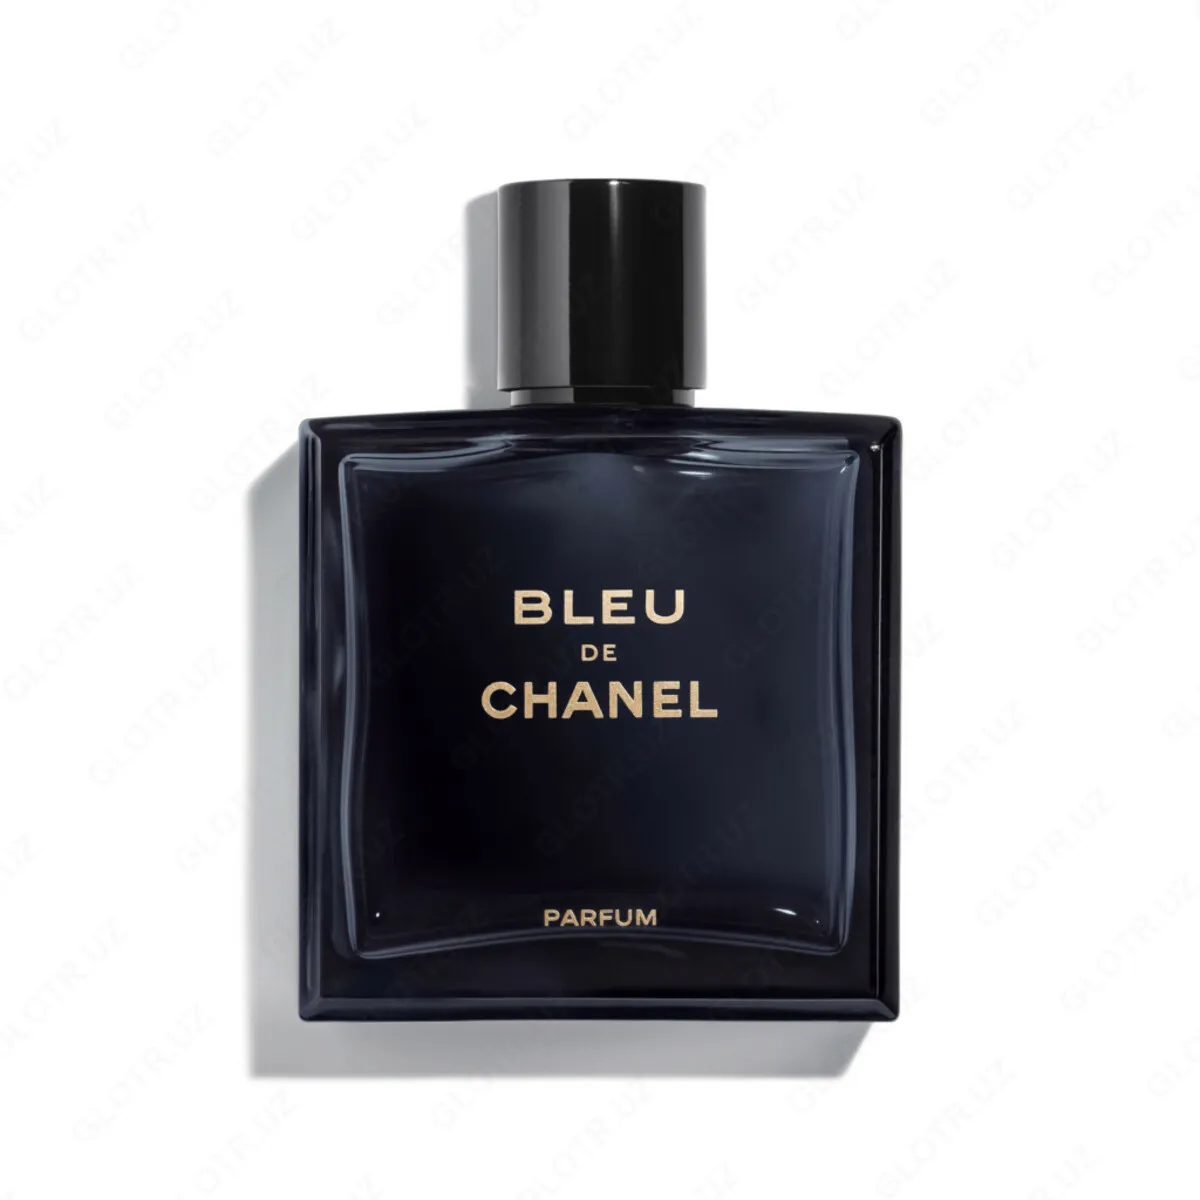 Bleu de Chanel Paris erkaklar parfyumeriyasi#1